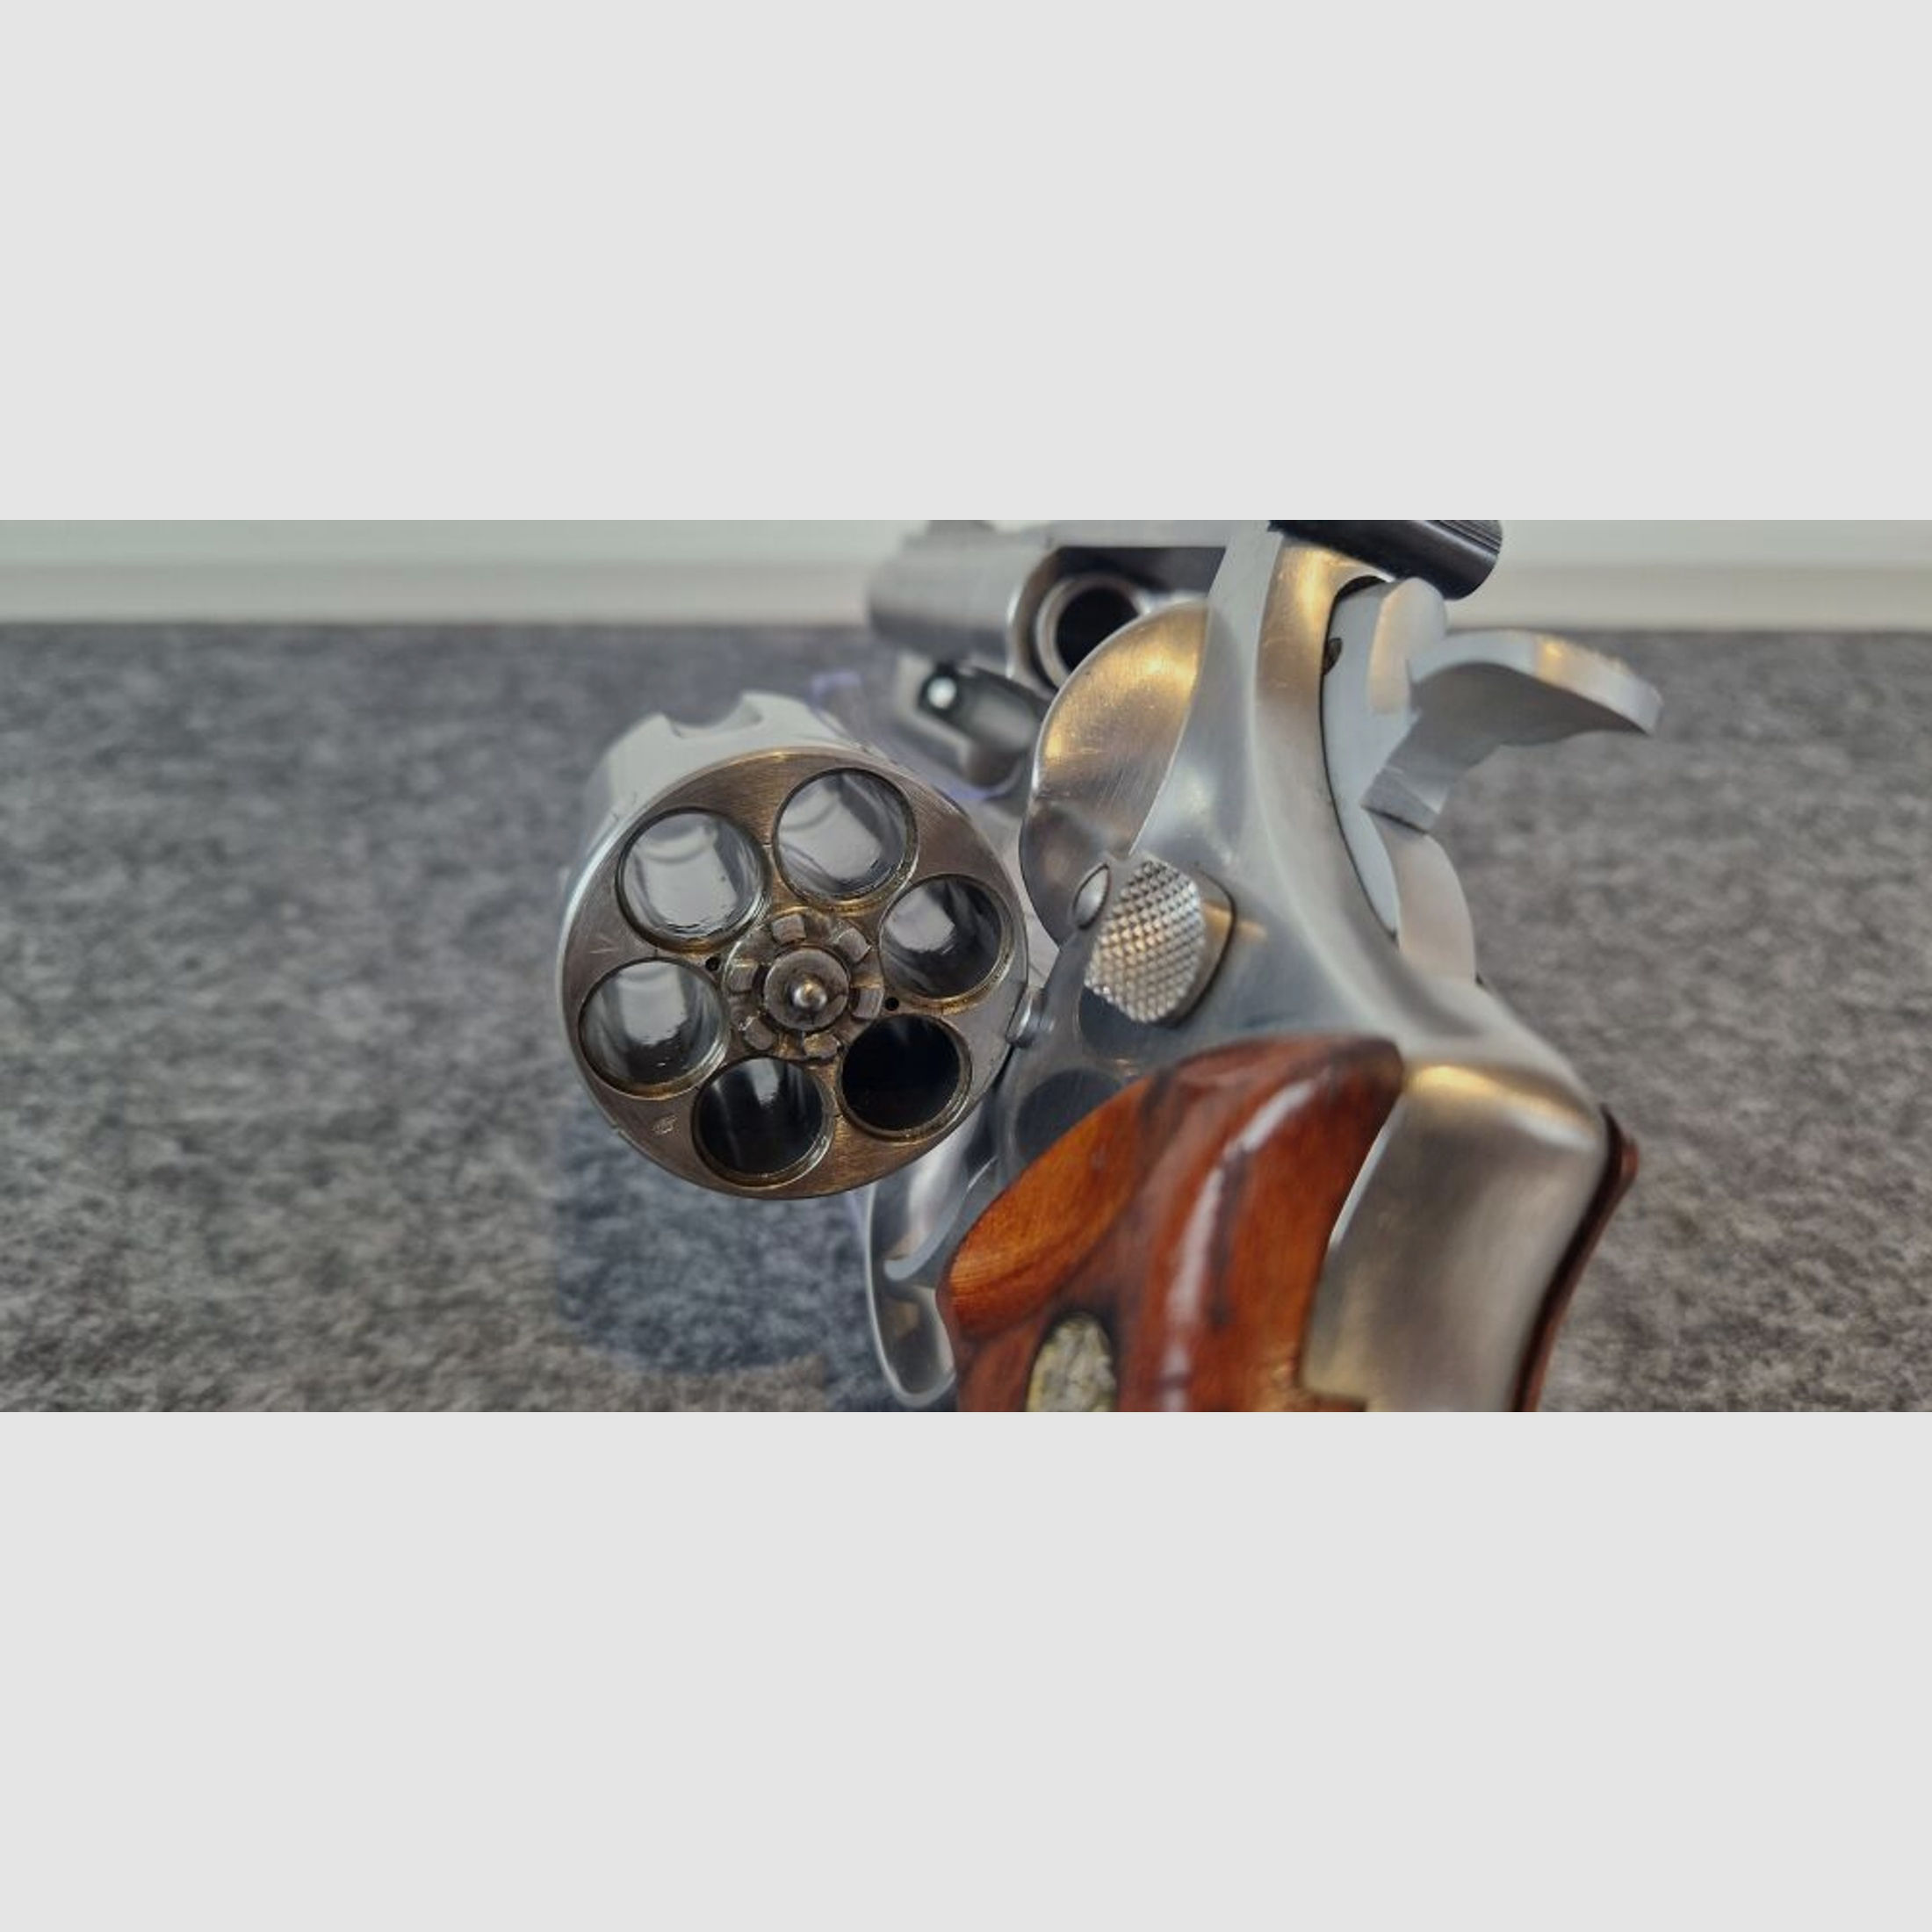 Smith & Wesson	 Revolver S&W Model 629 - .44 Rem. Mag.